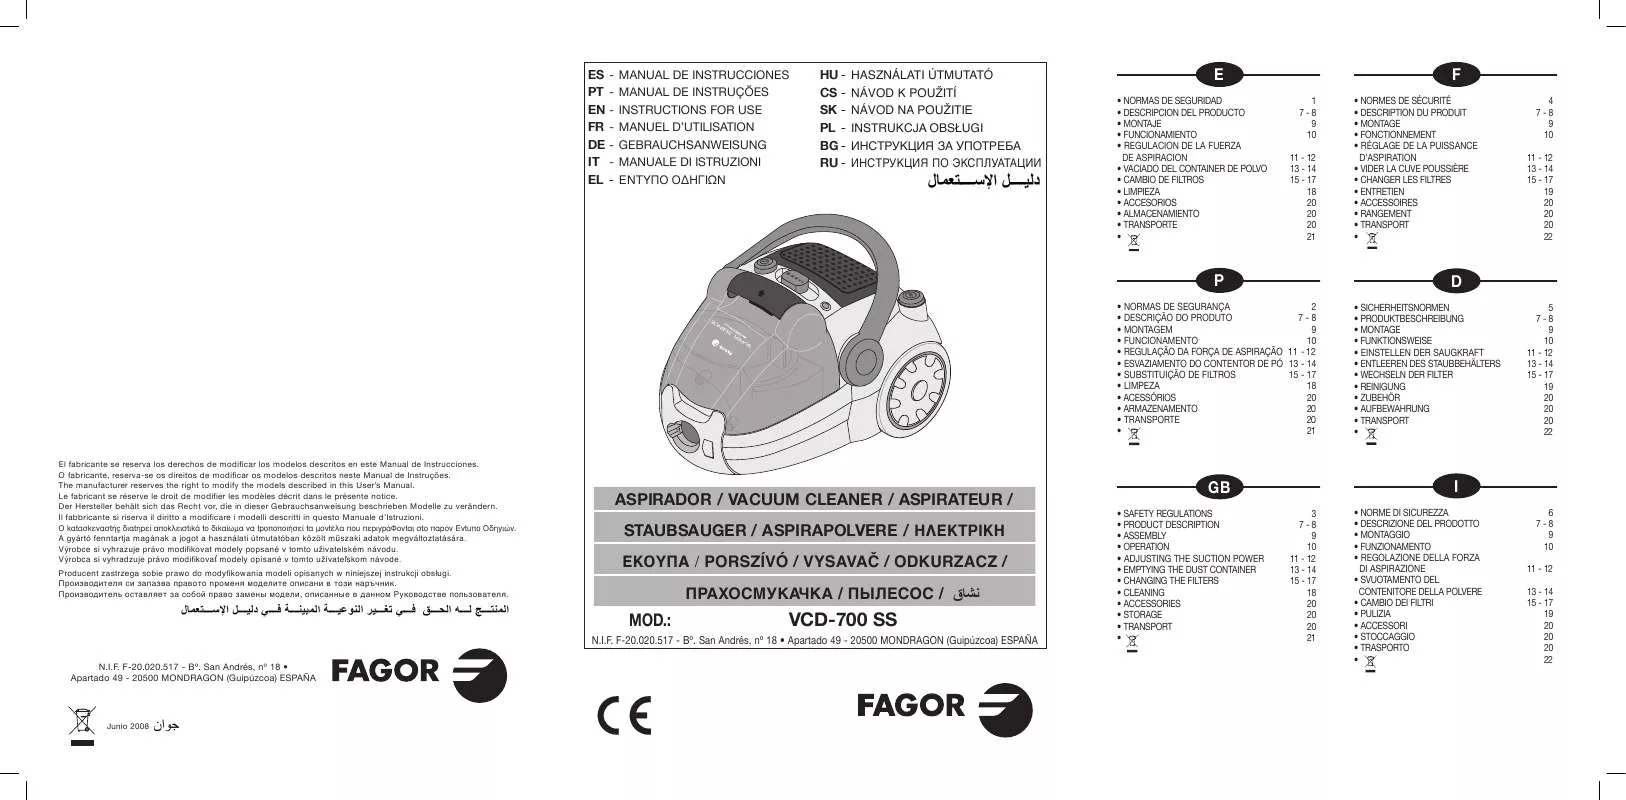 Mode d'emploi FAGOR VCE-700 SS